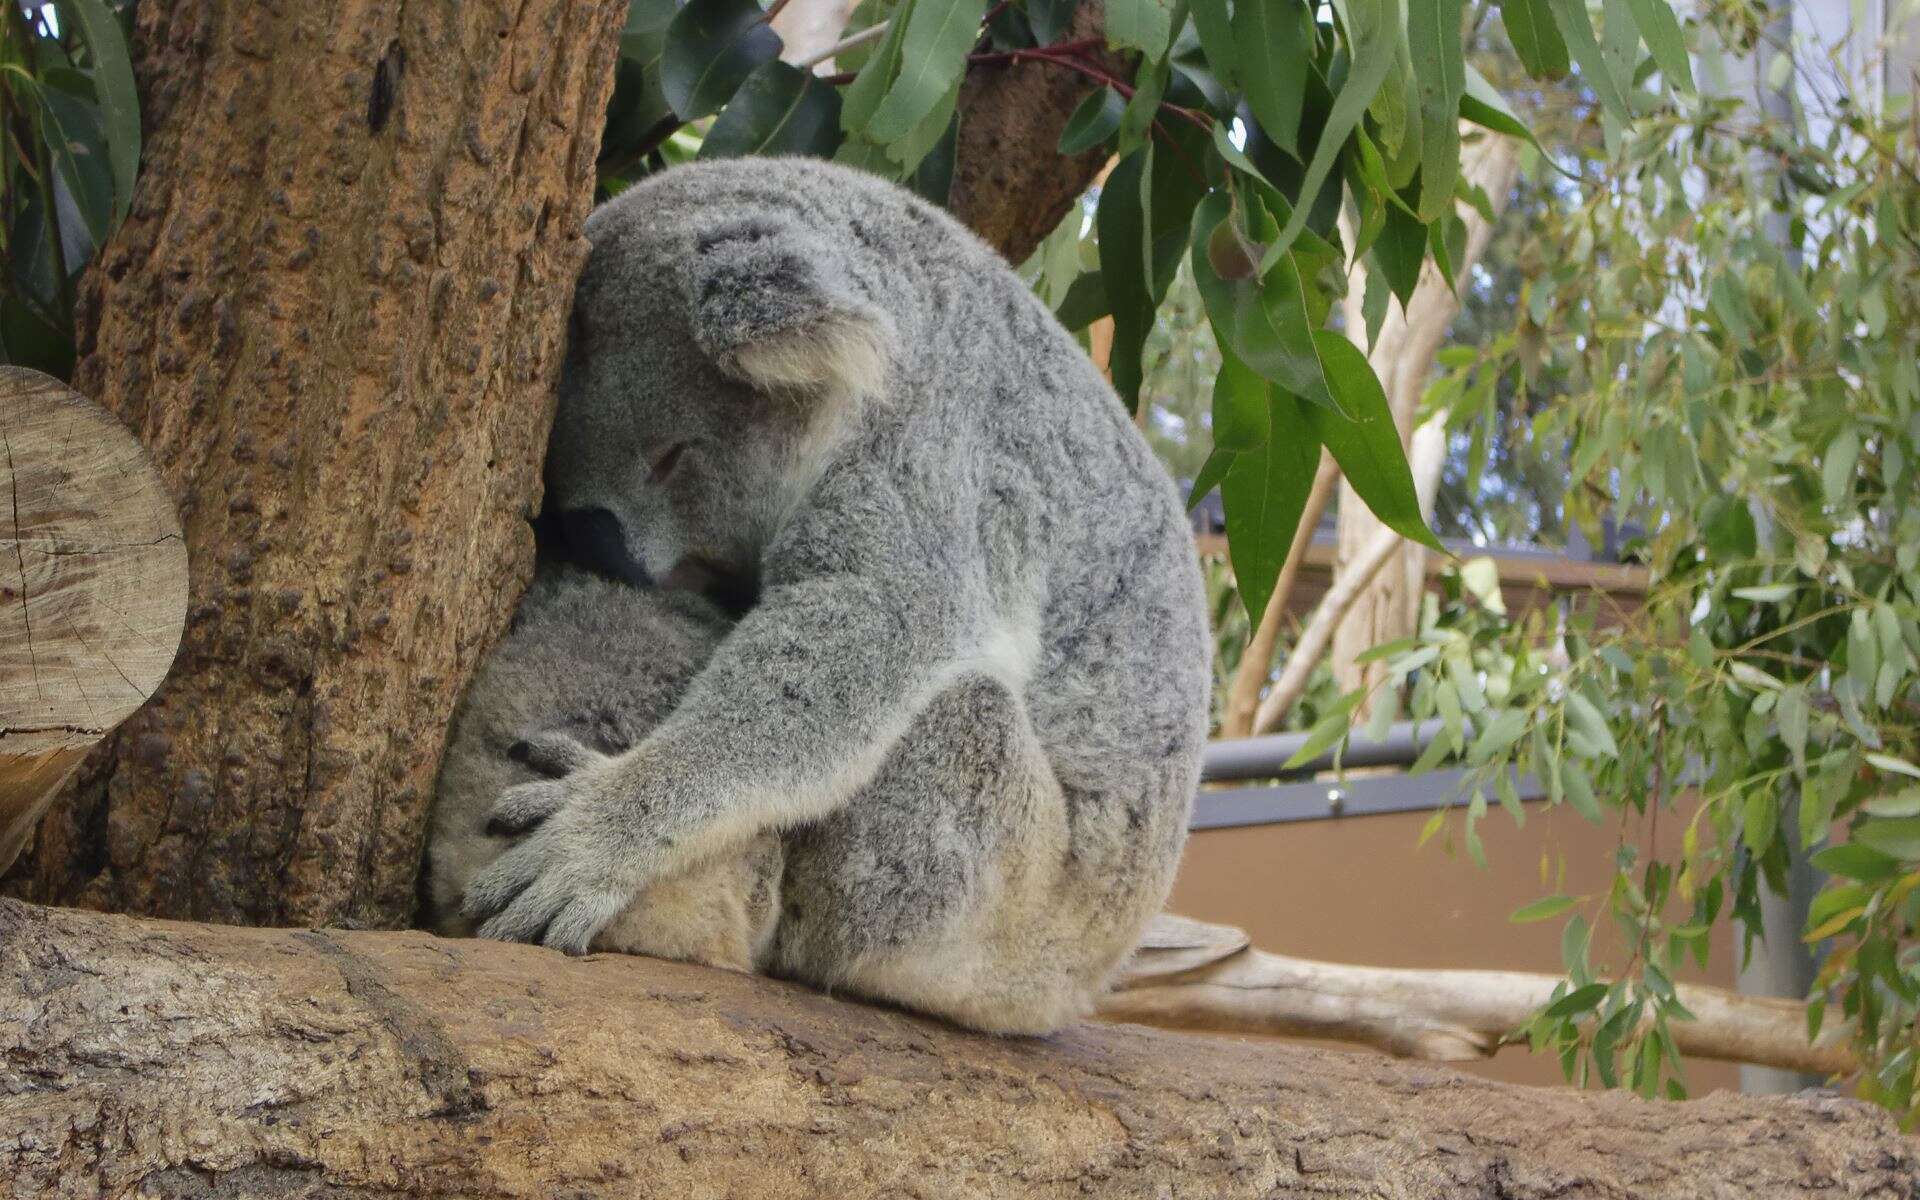 Image of koalas